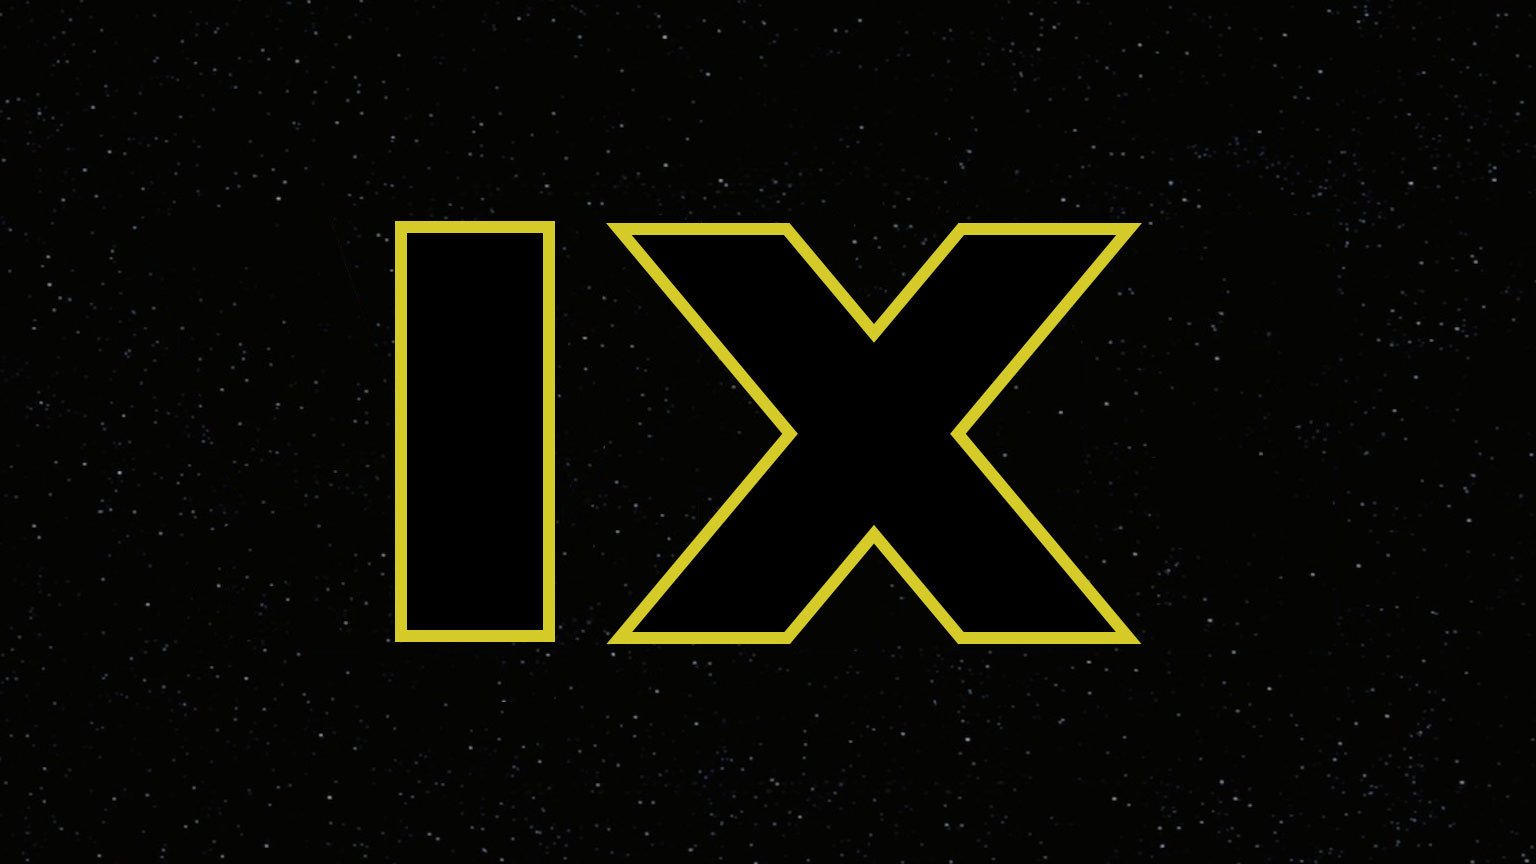 Star Wars Episode IX Logo